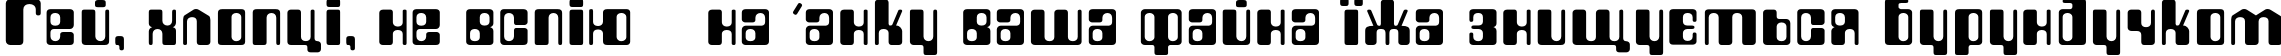 Пример написания шрифтом Countdown текста на украинском